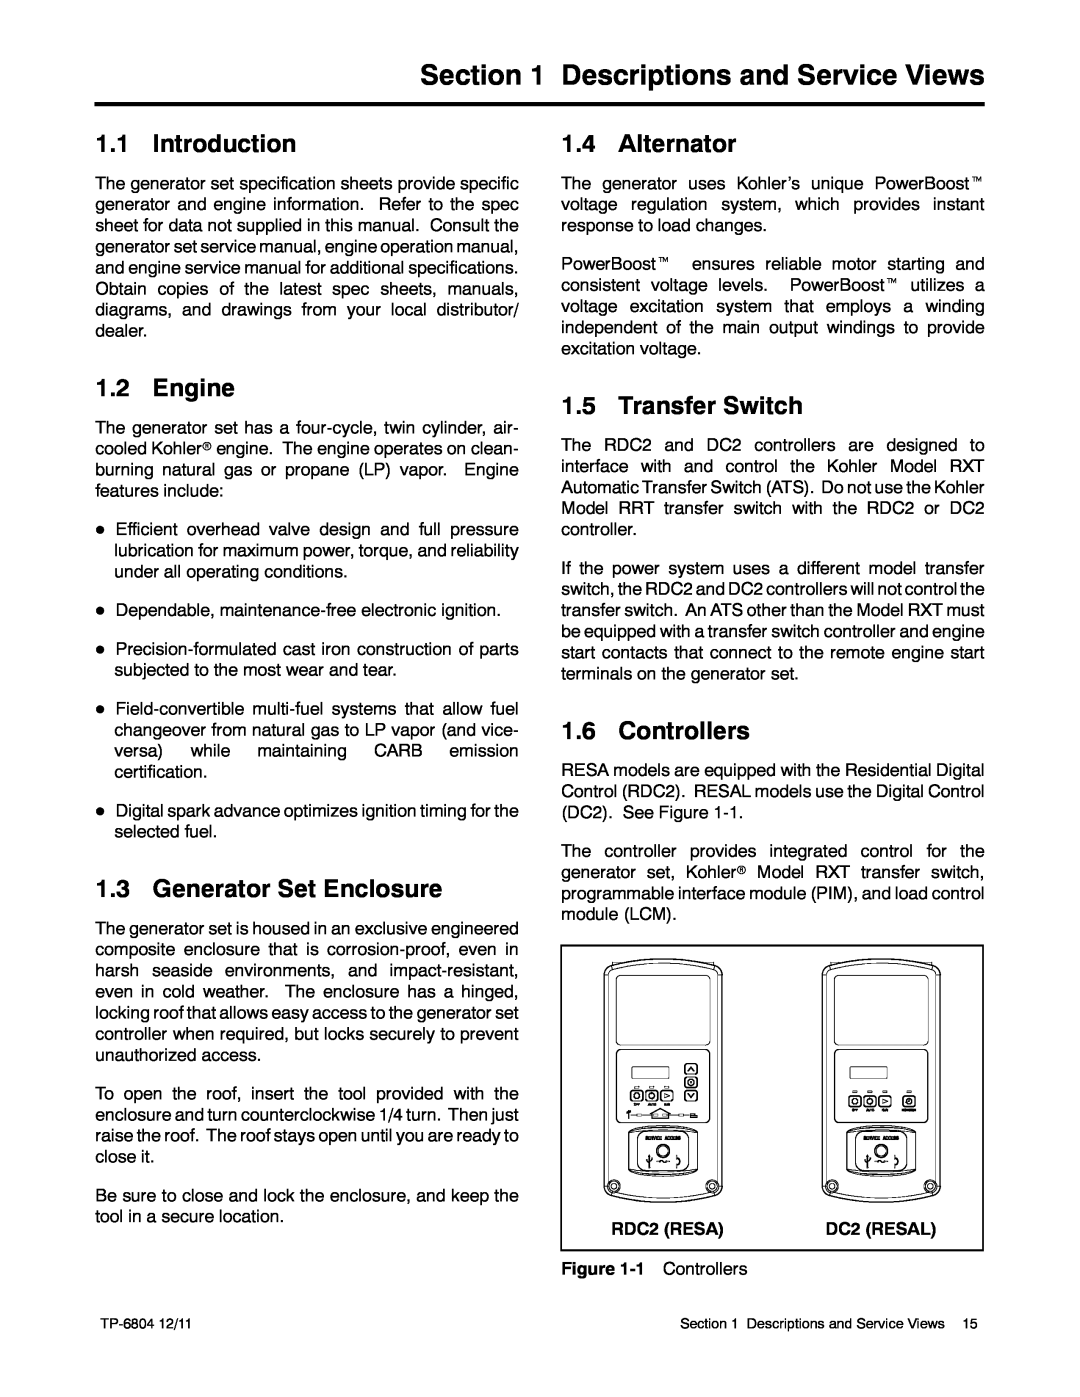 Kohler 14/20RESAL Descriptions and Service Views, Introduction, Engine, Generator Set Enclosure, Alternator, Controllers 